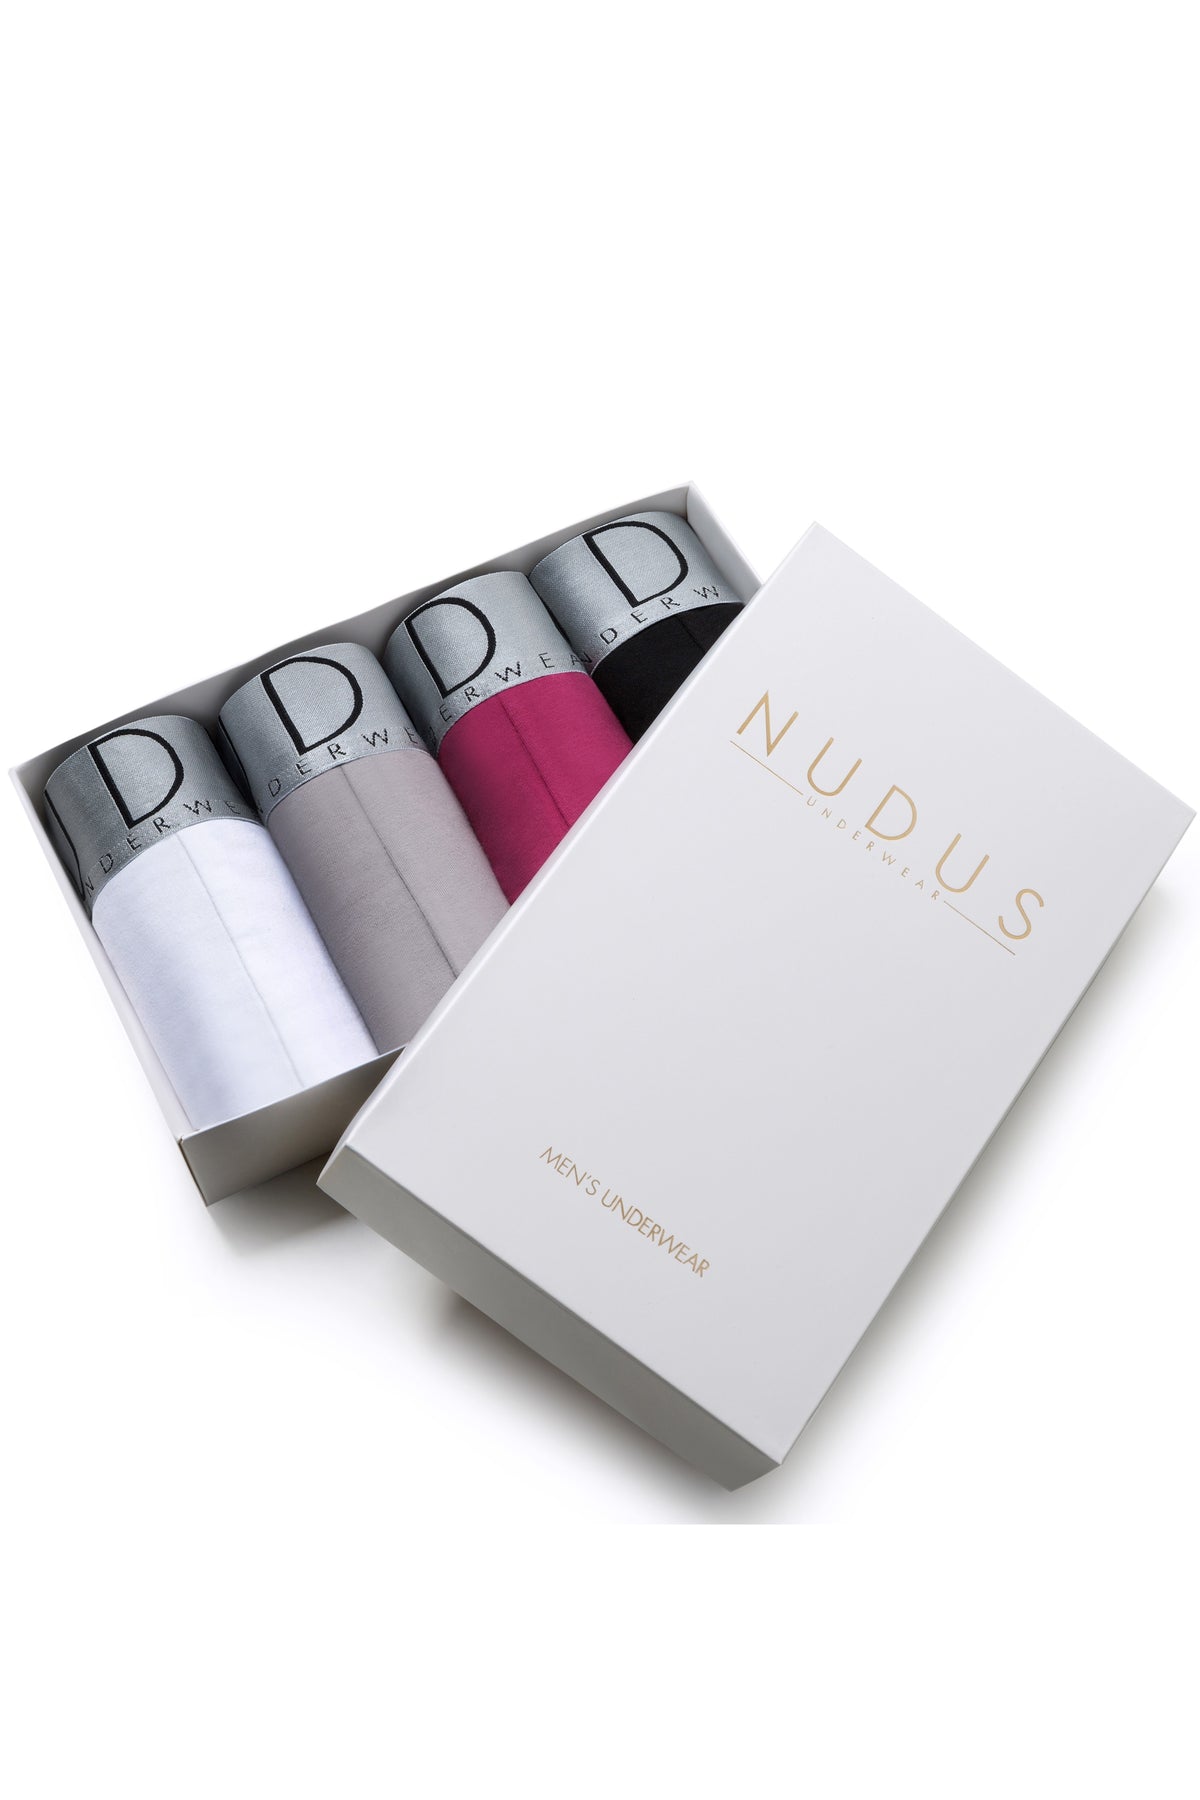 NUDUS Men's Cotton Briefs - Pack of 4 - Gift Box